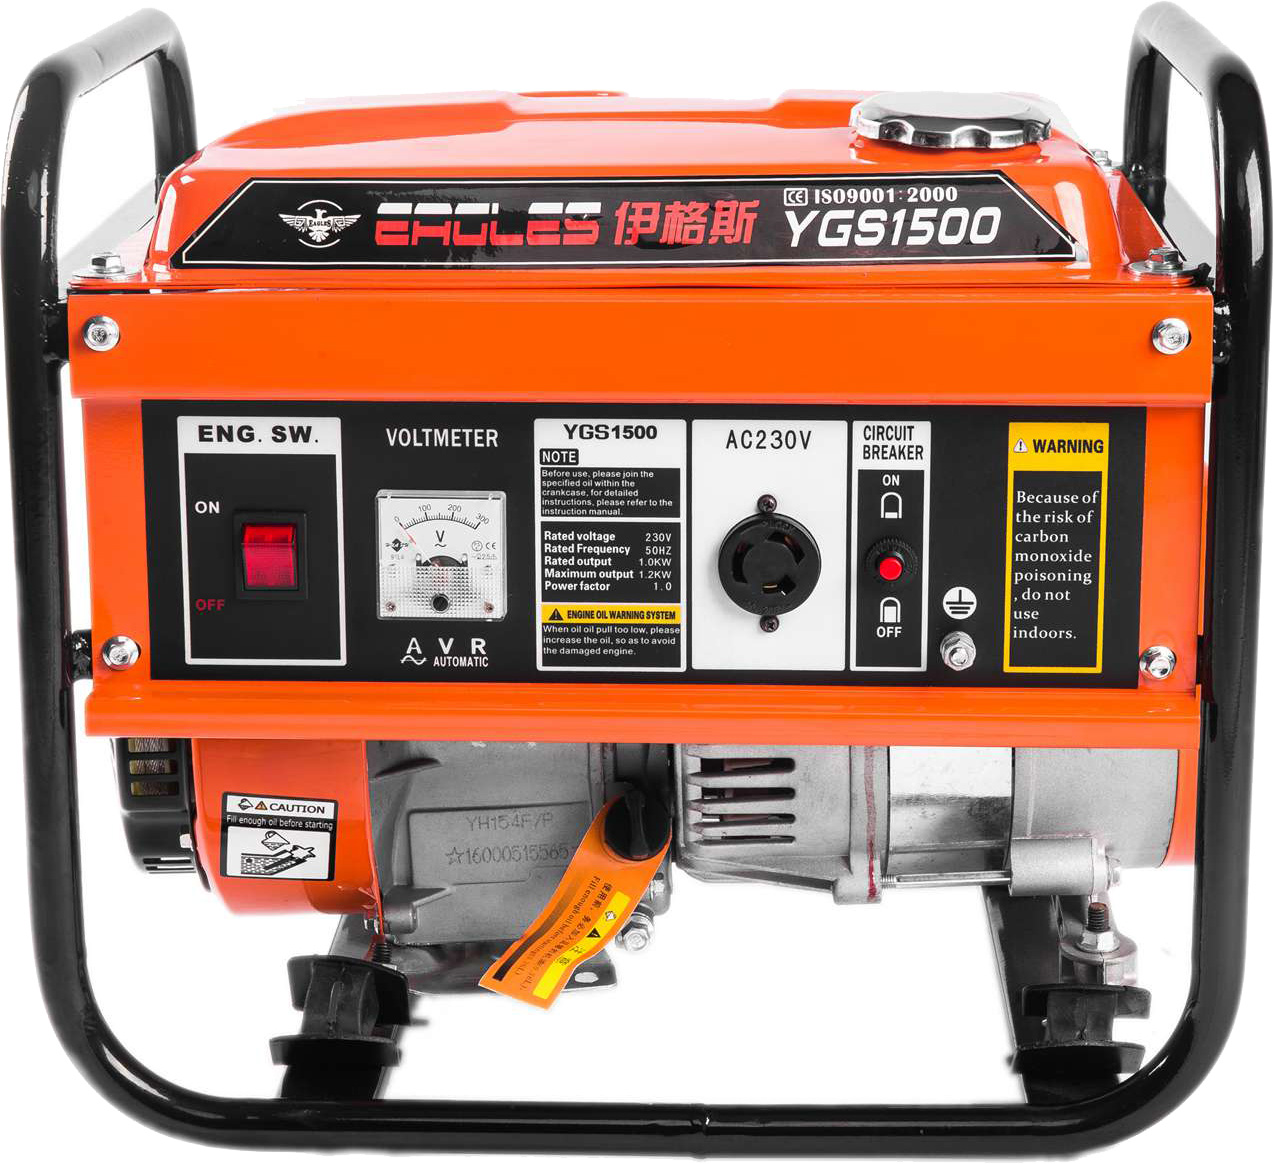 YGS1500Gasoline generator